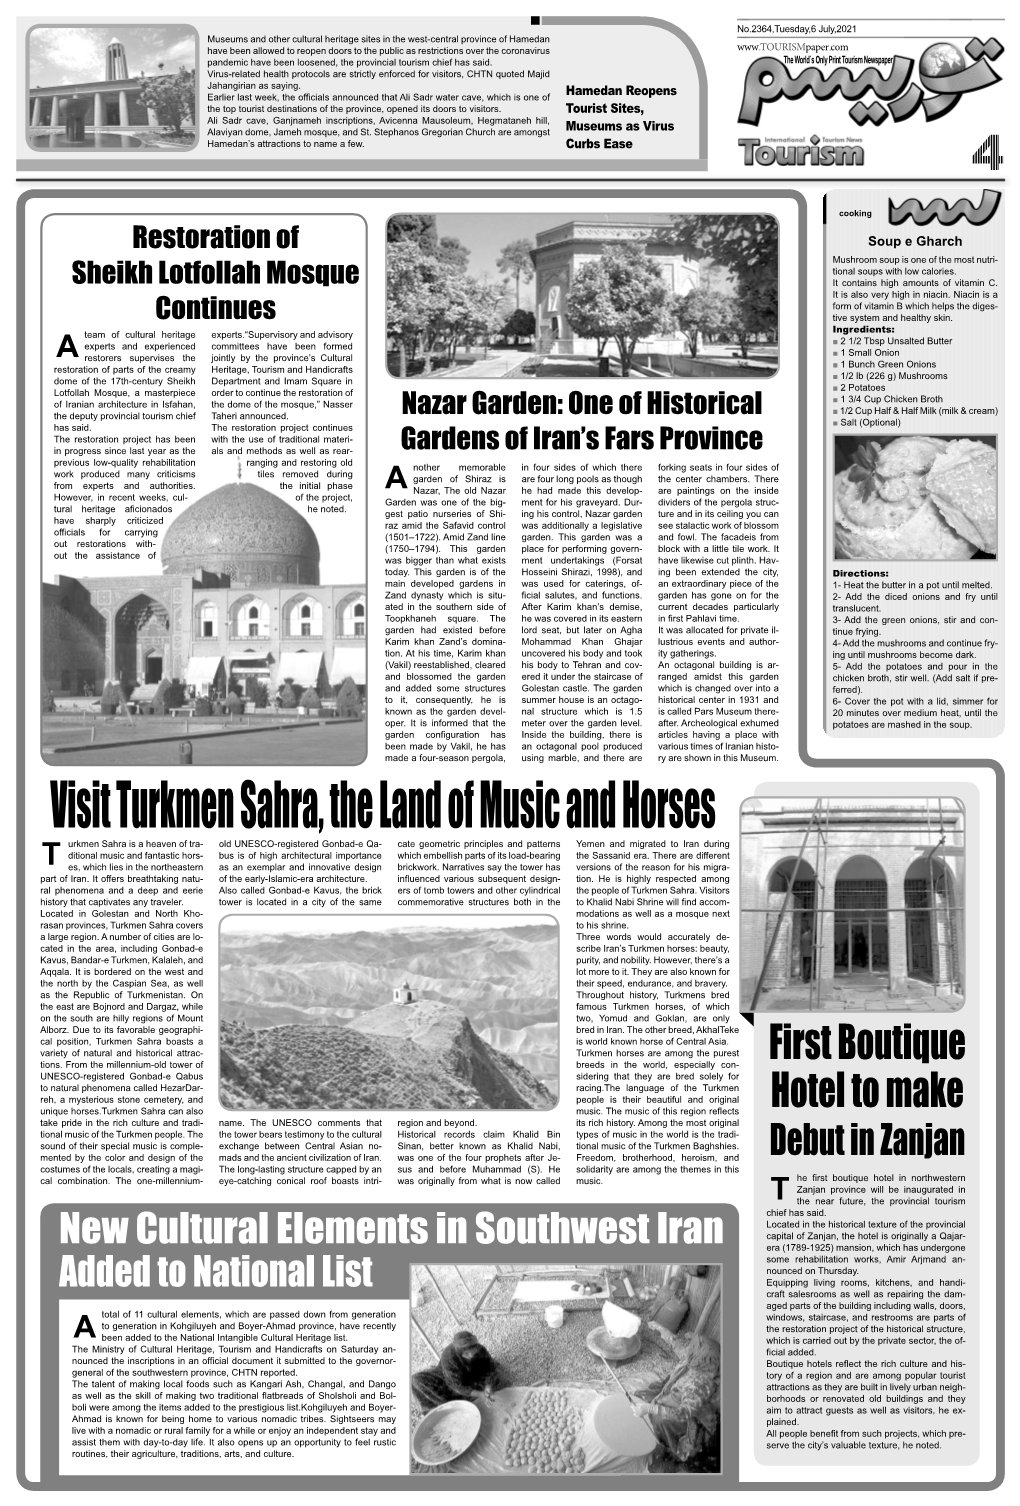 Visit Turkmen Sahra, the Land of Music and Horses